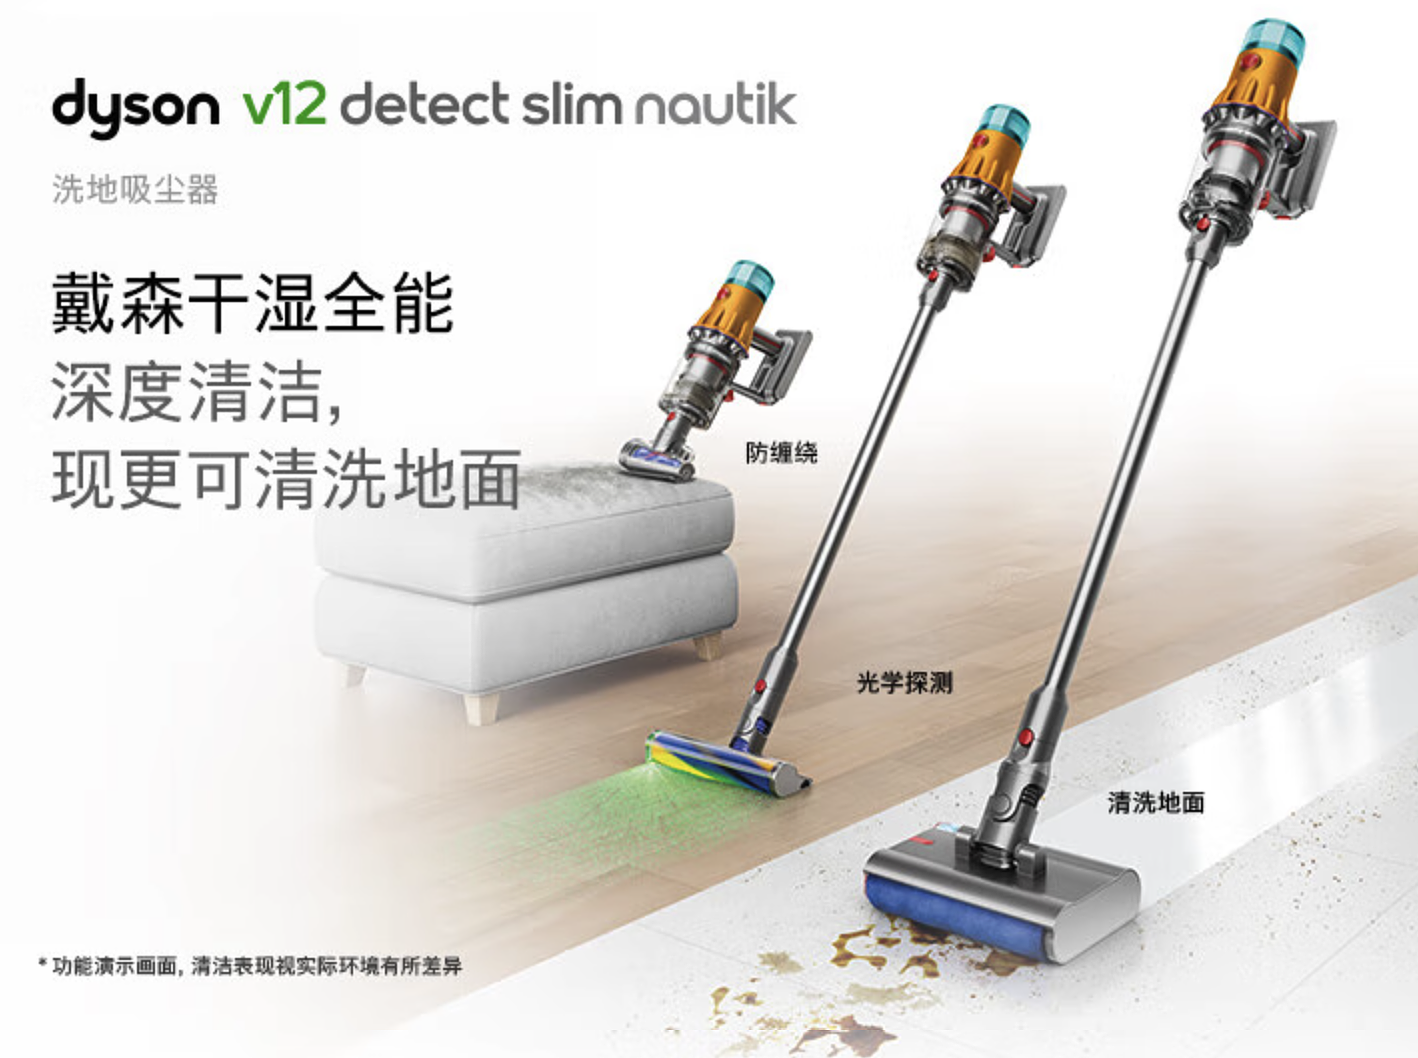 【IT之家评测室】更懂中国消费者的洗地吸尘器？戴森 V12 Detect Slim Nautik 体验 - 1